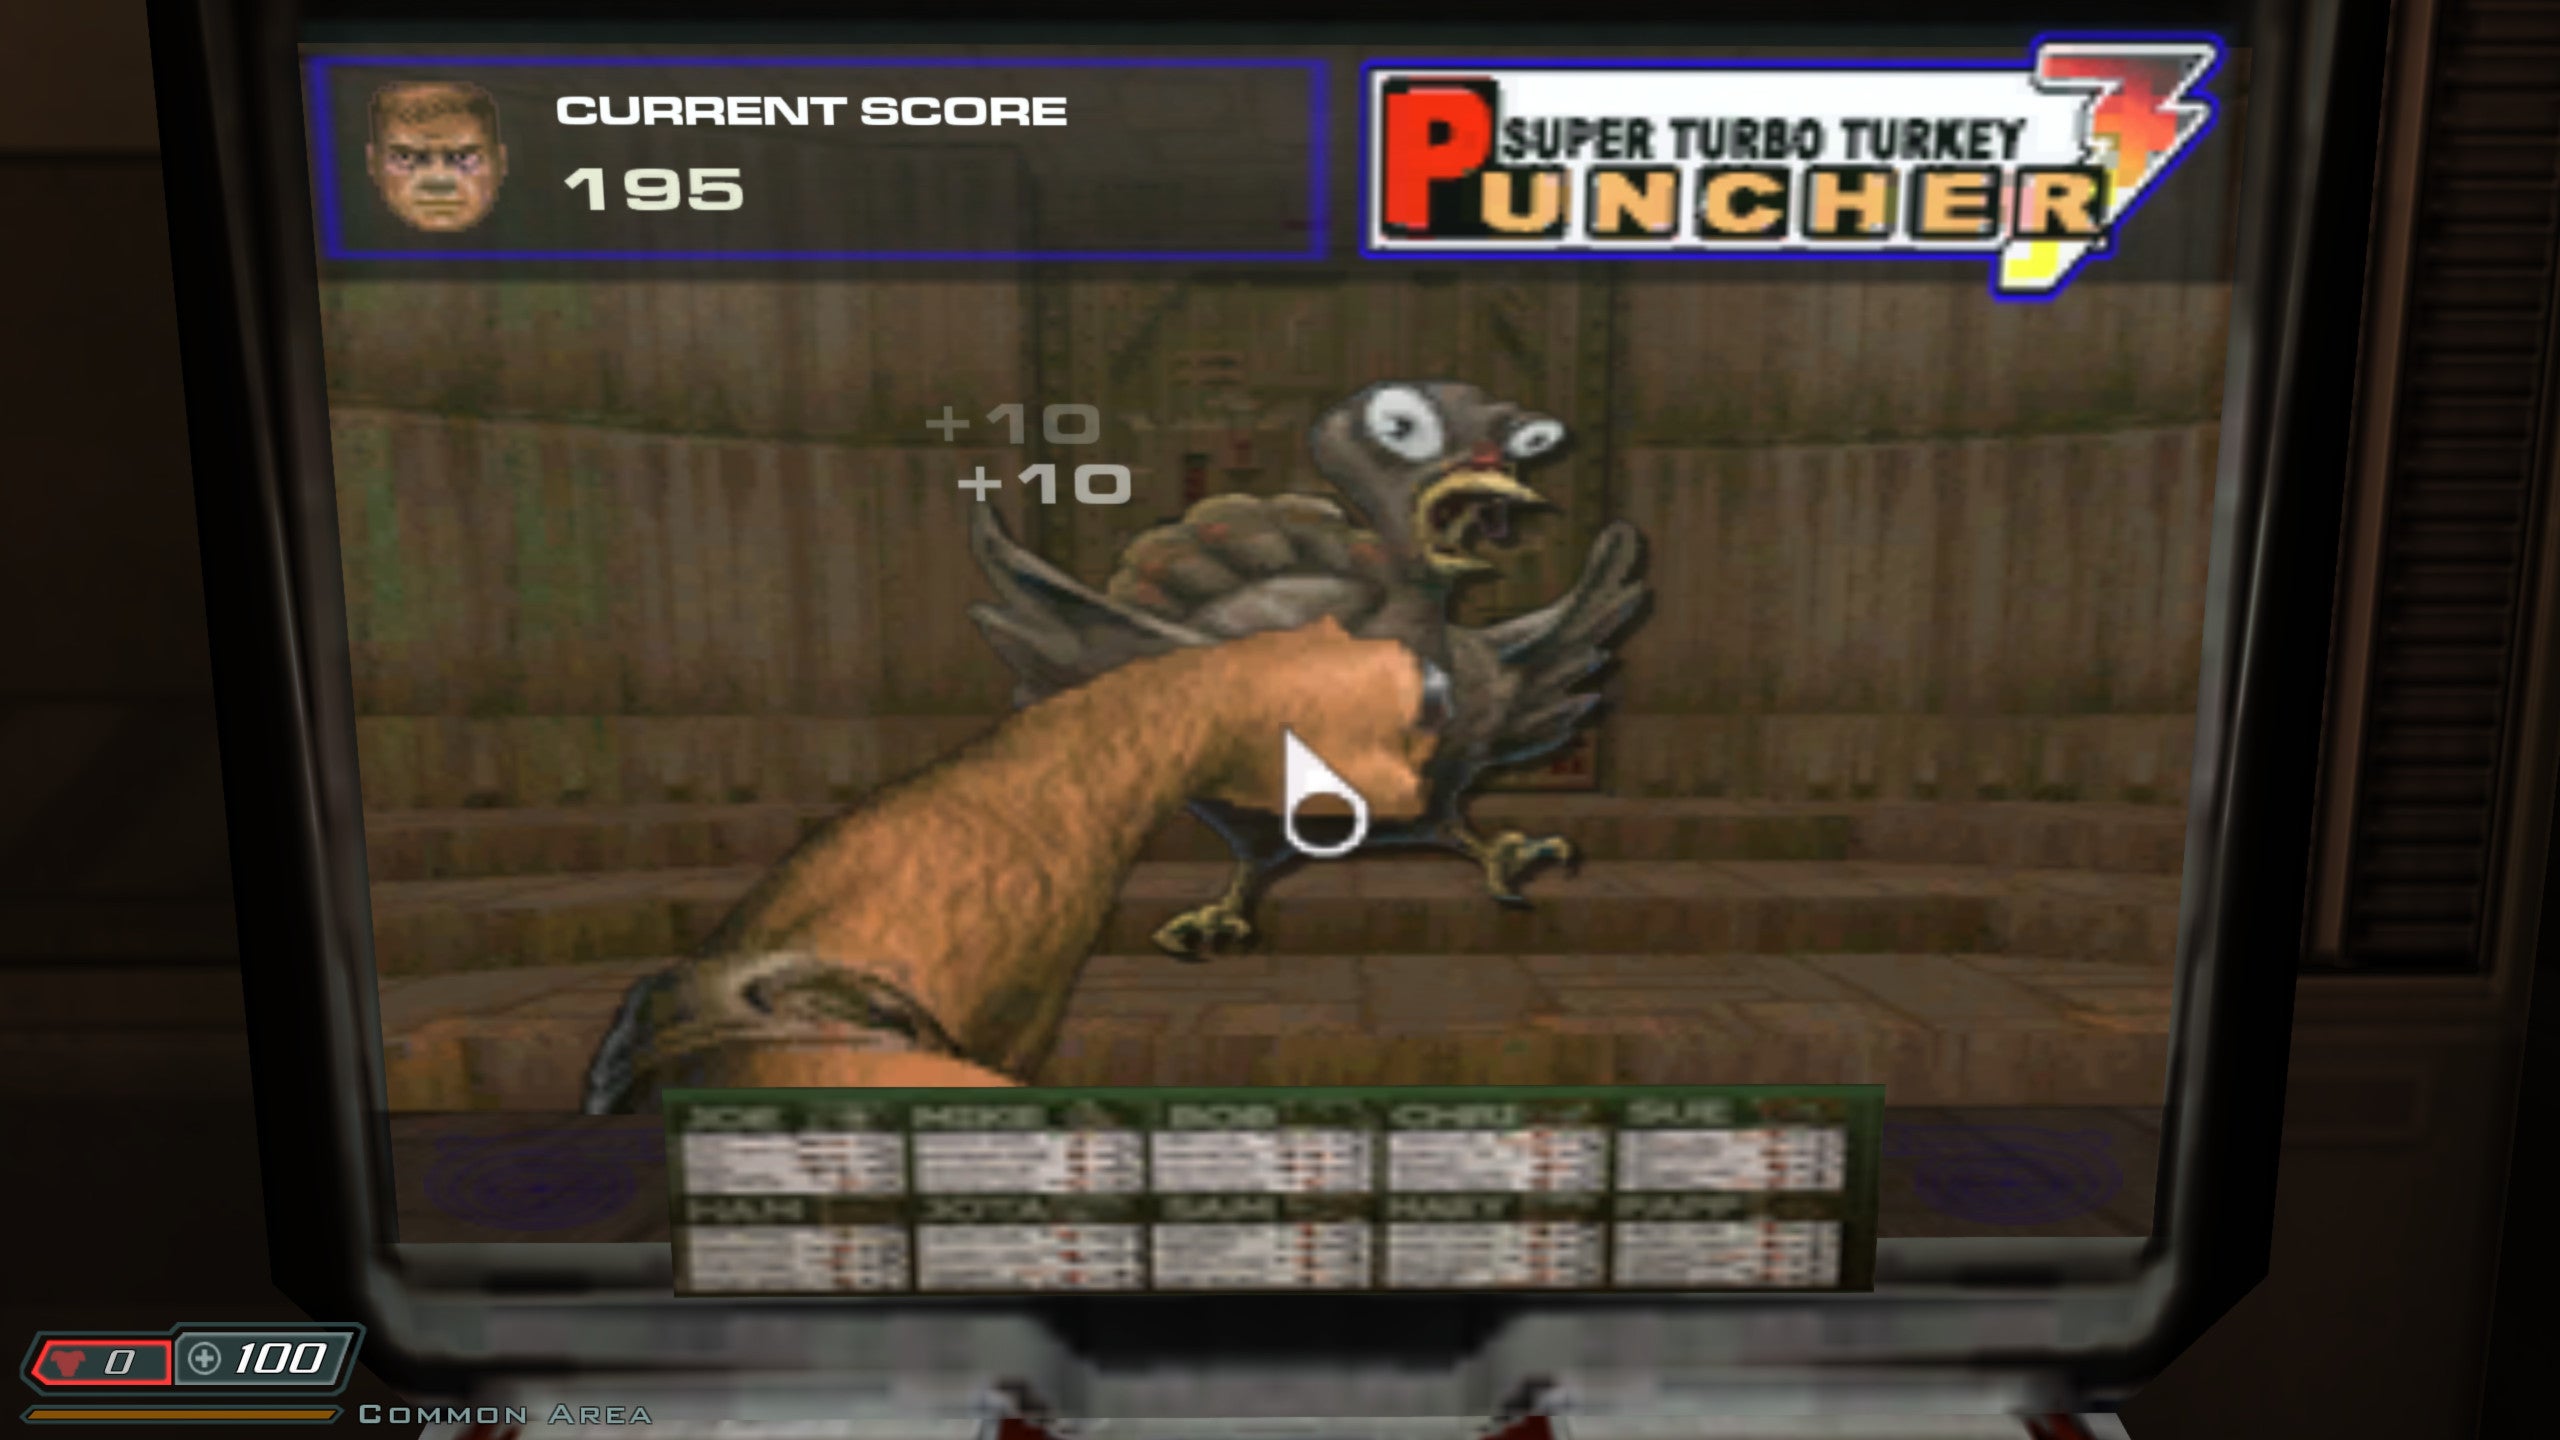 Punching a turkey in Doom 3's Super Turbo Turkey Puncher 3.